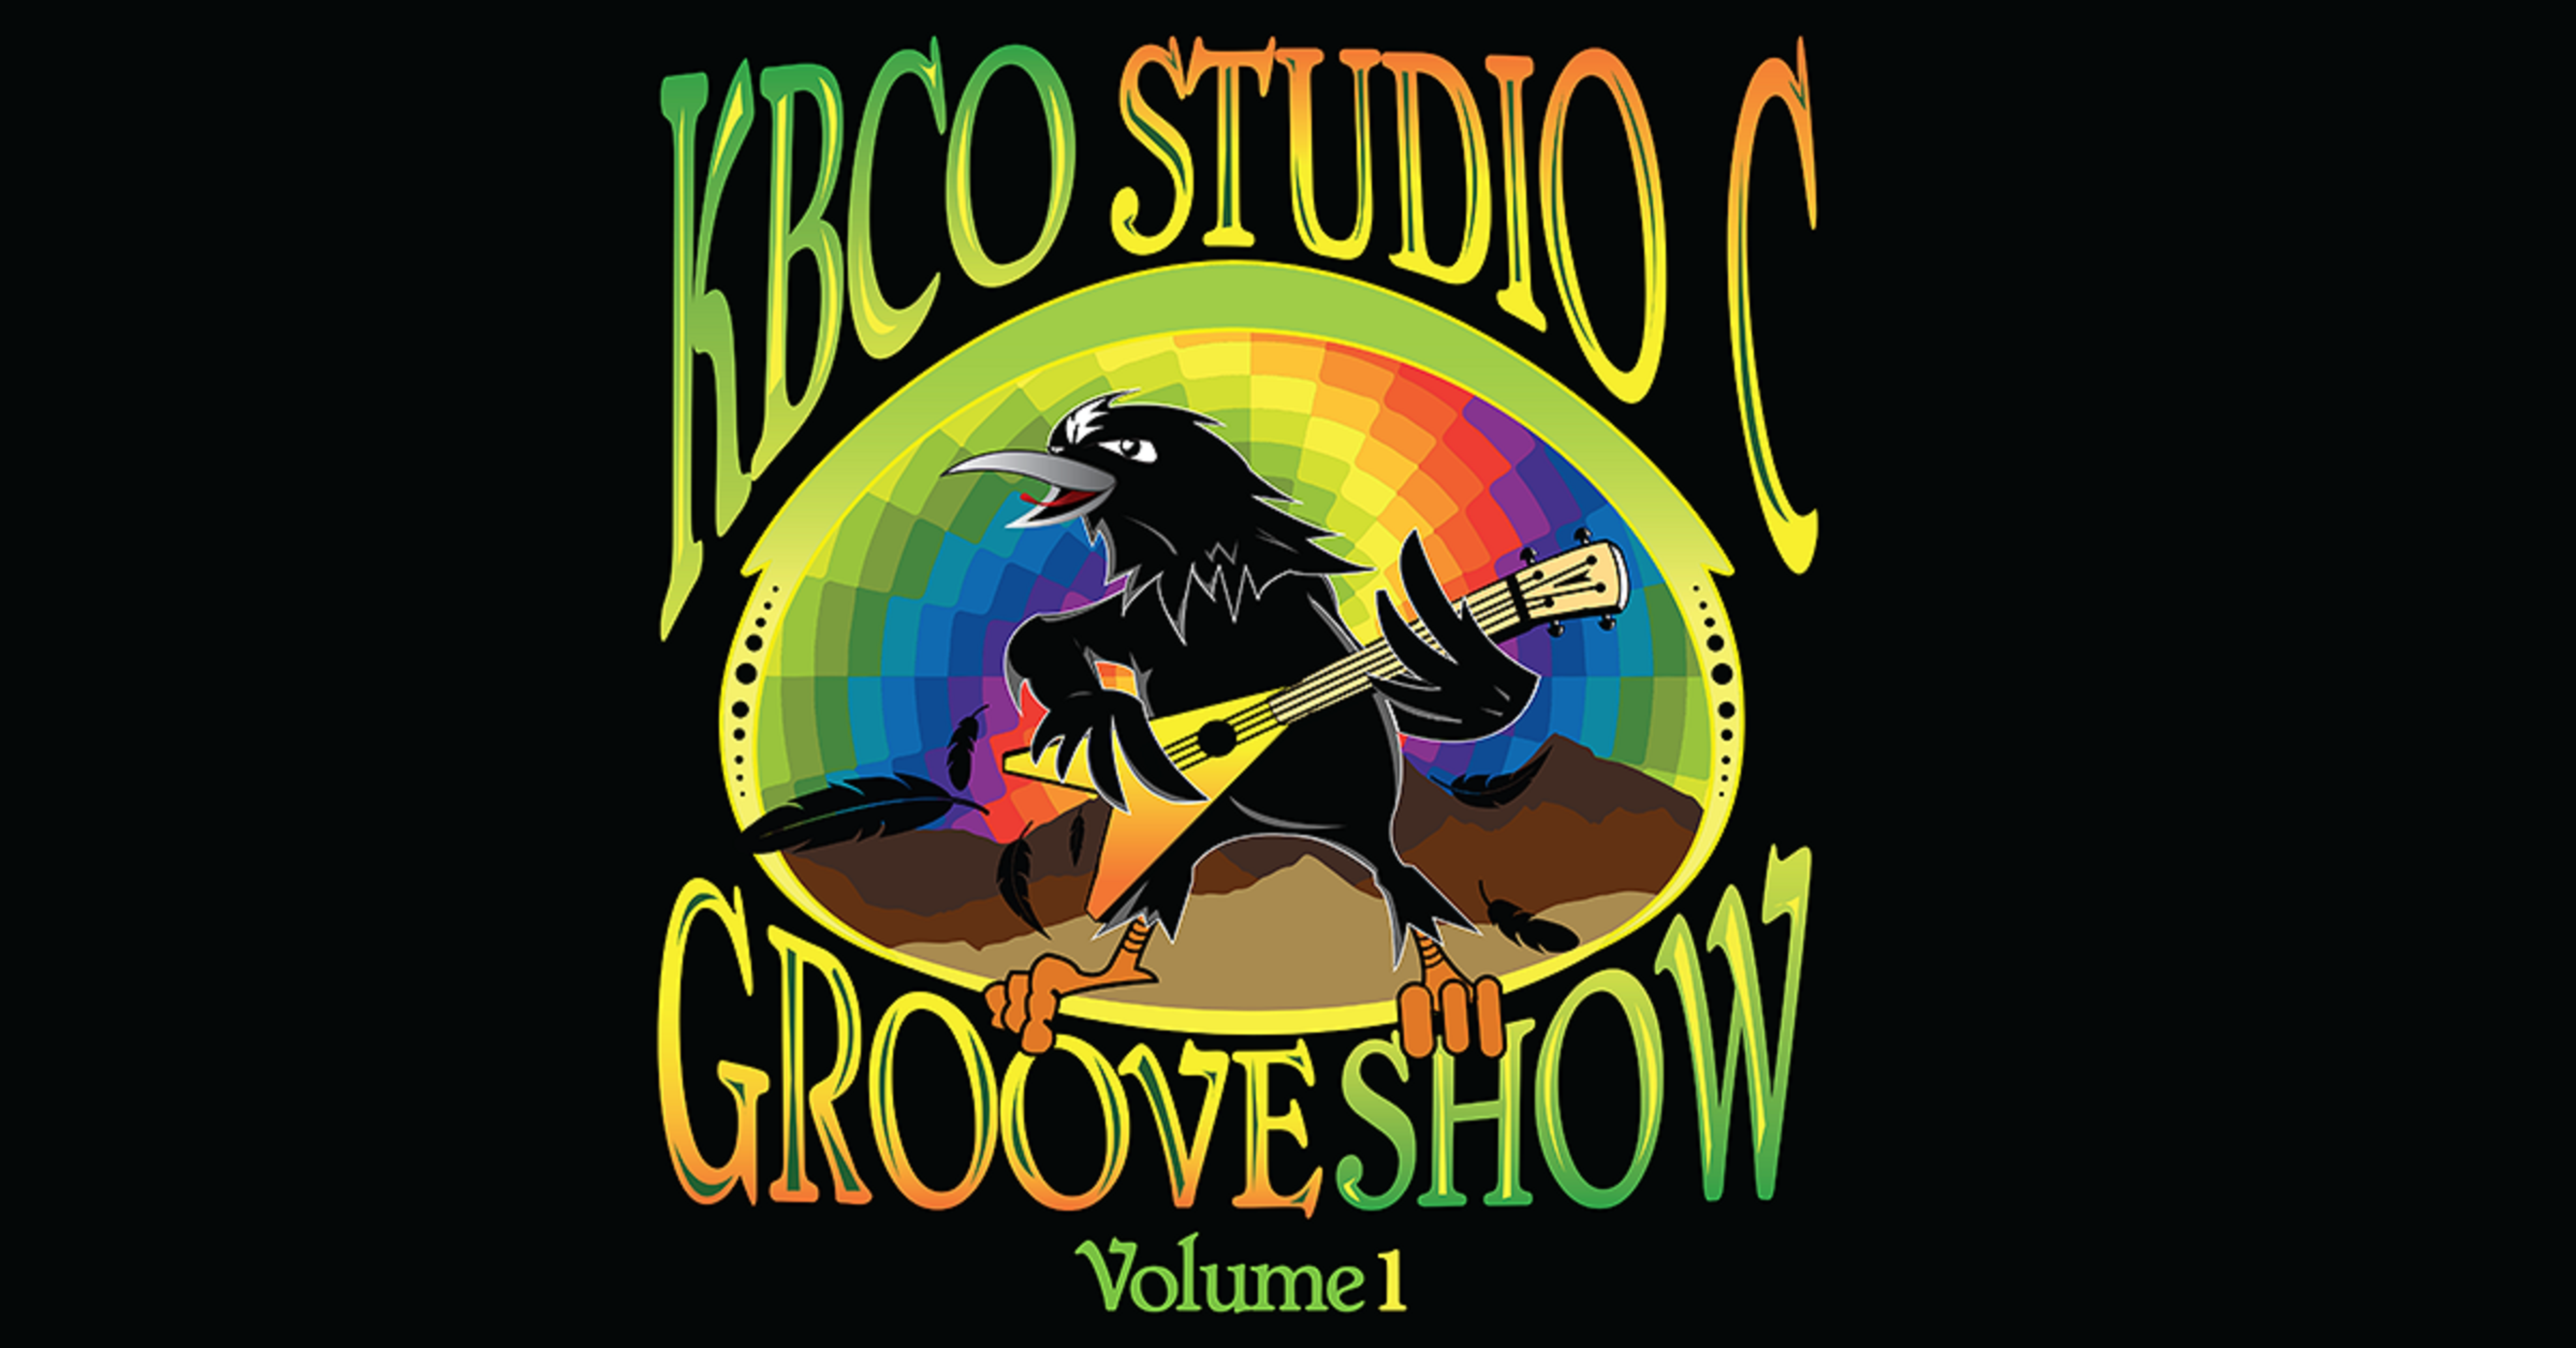 KBCO Studio C Groove Show Volume 1 on Vinyl Grateful Web